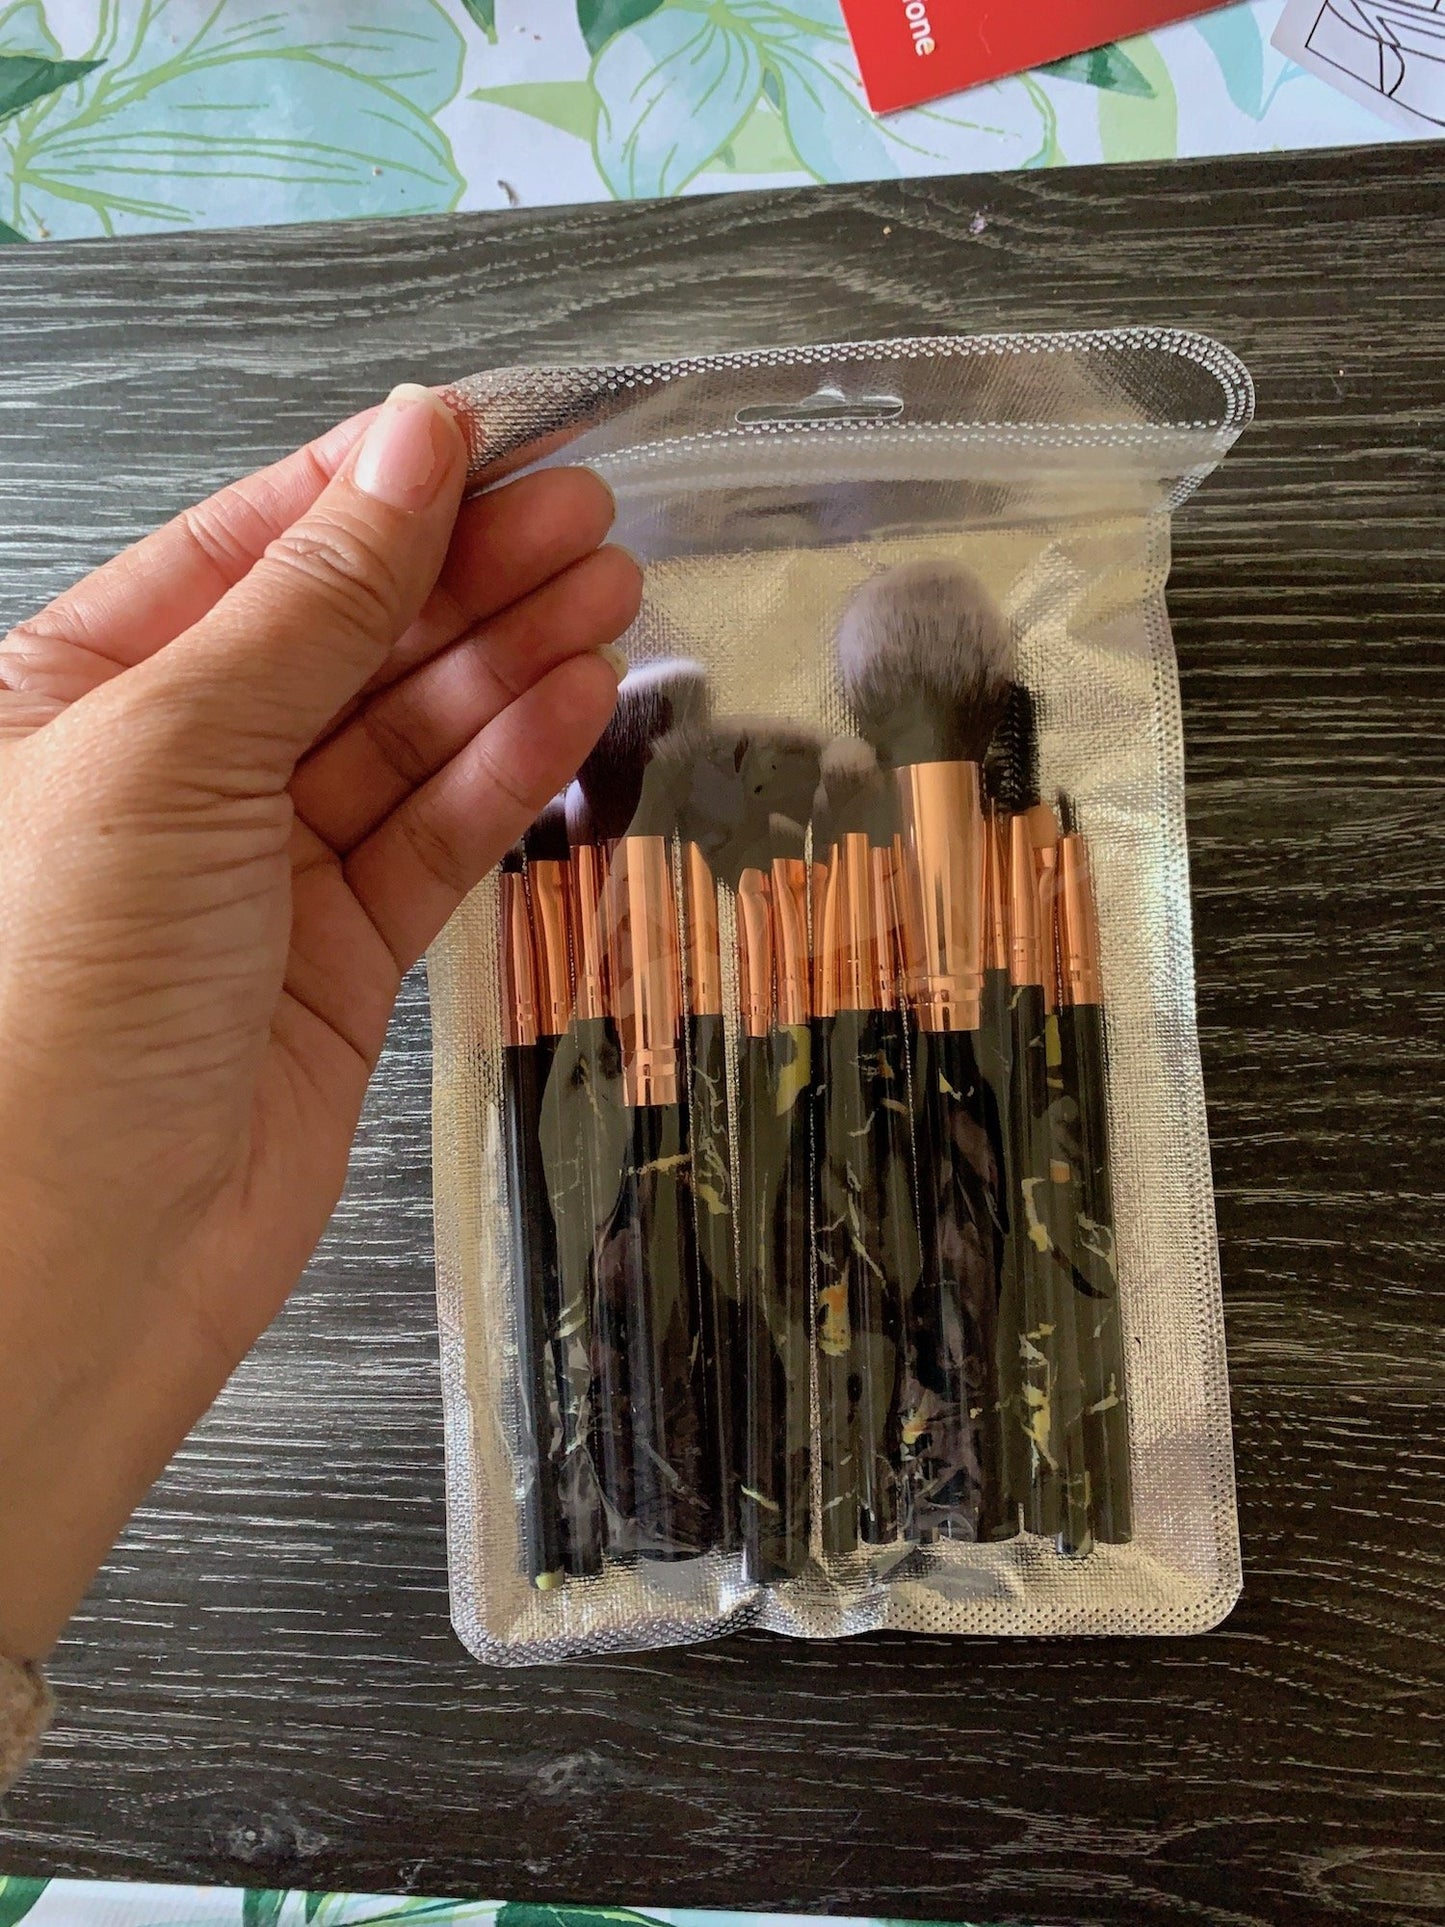 Makeup Brushes Travel Size Sets - Plastic Handle